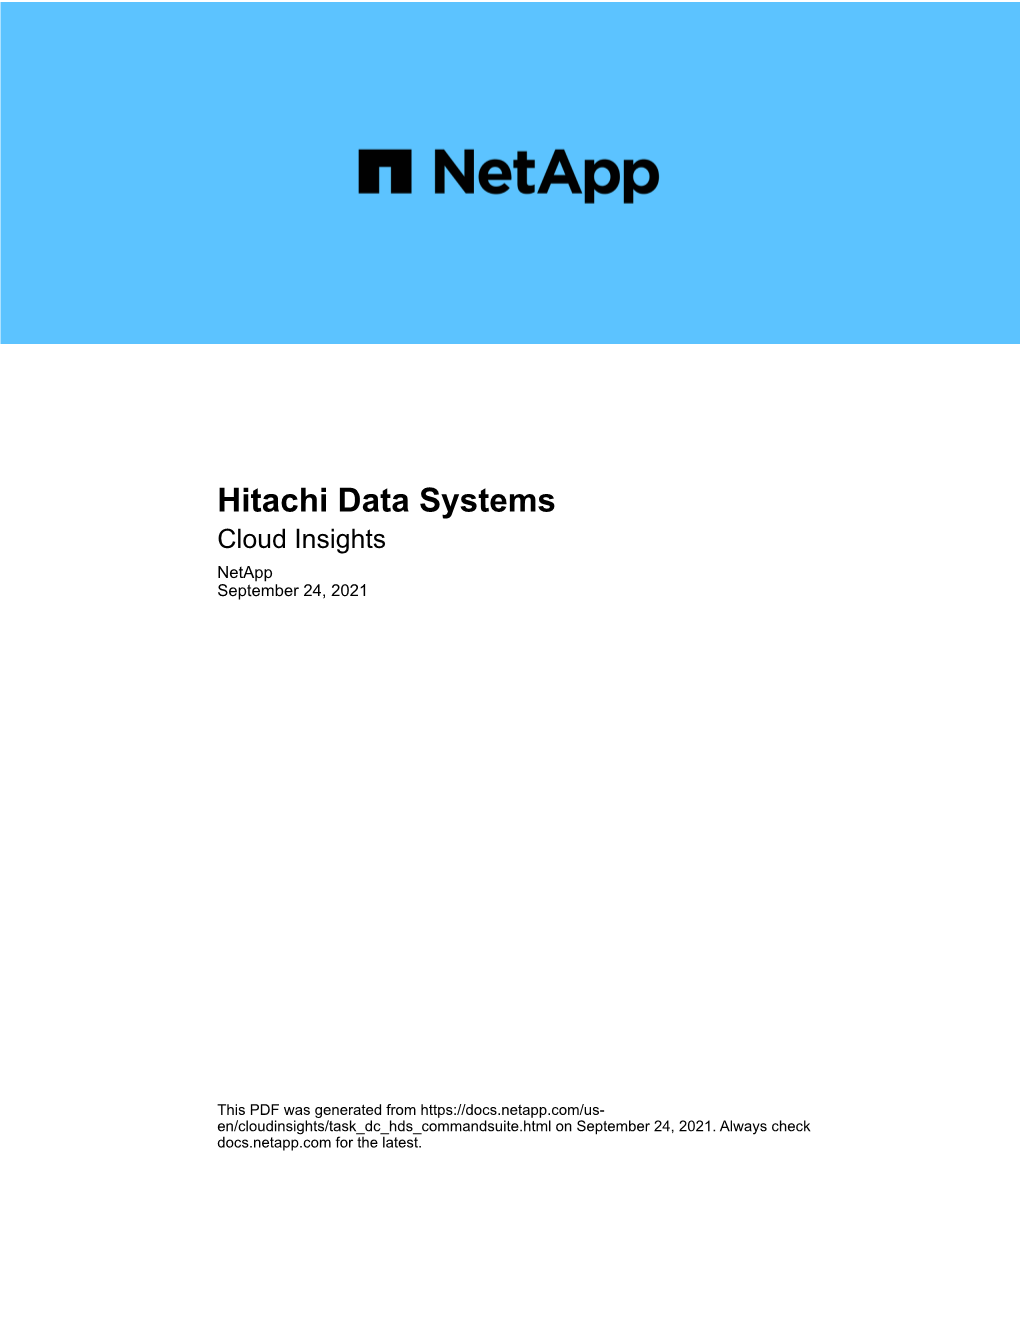 Hitachi Data Systems : Cloud Insights